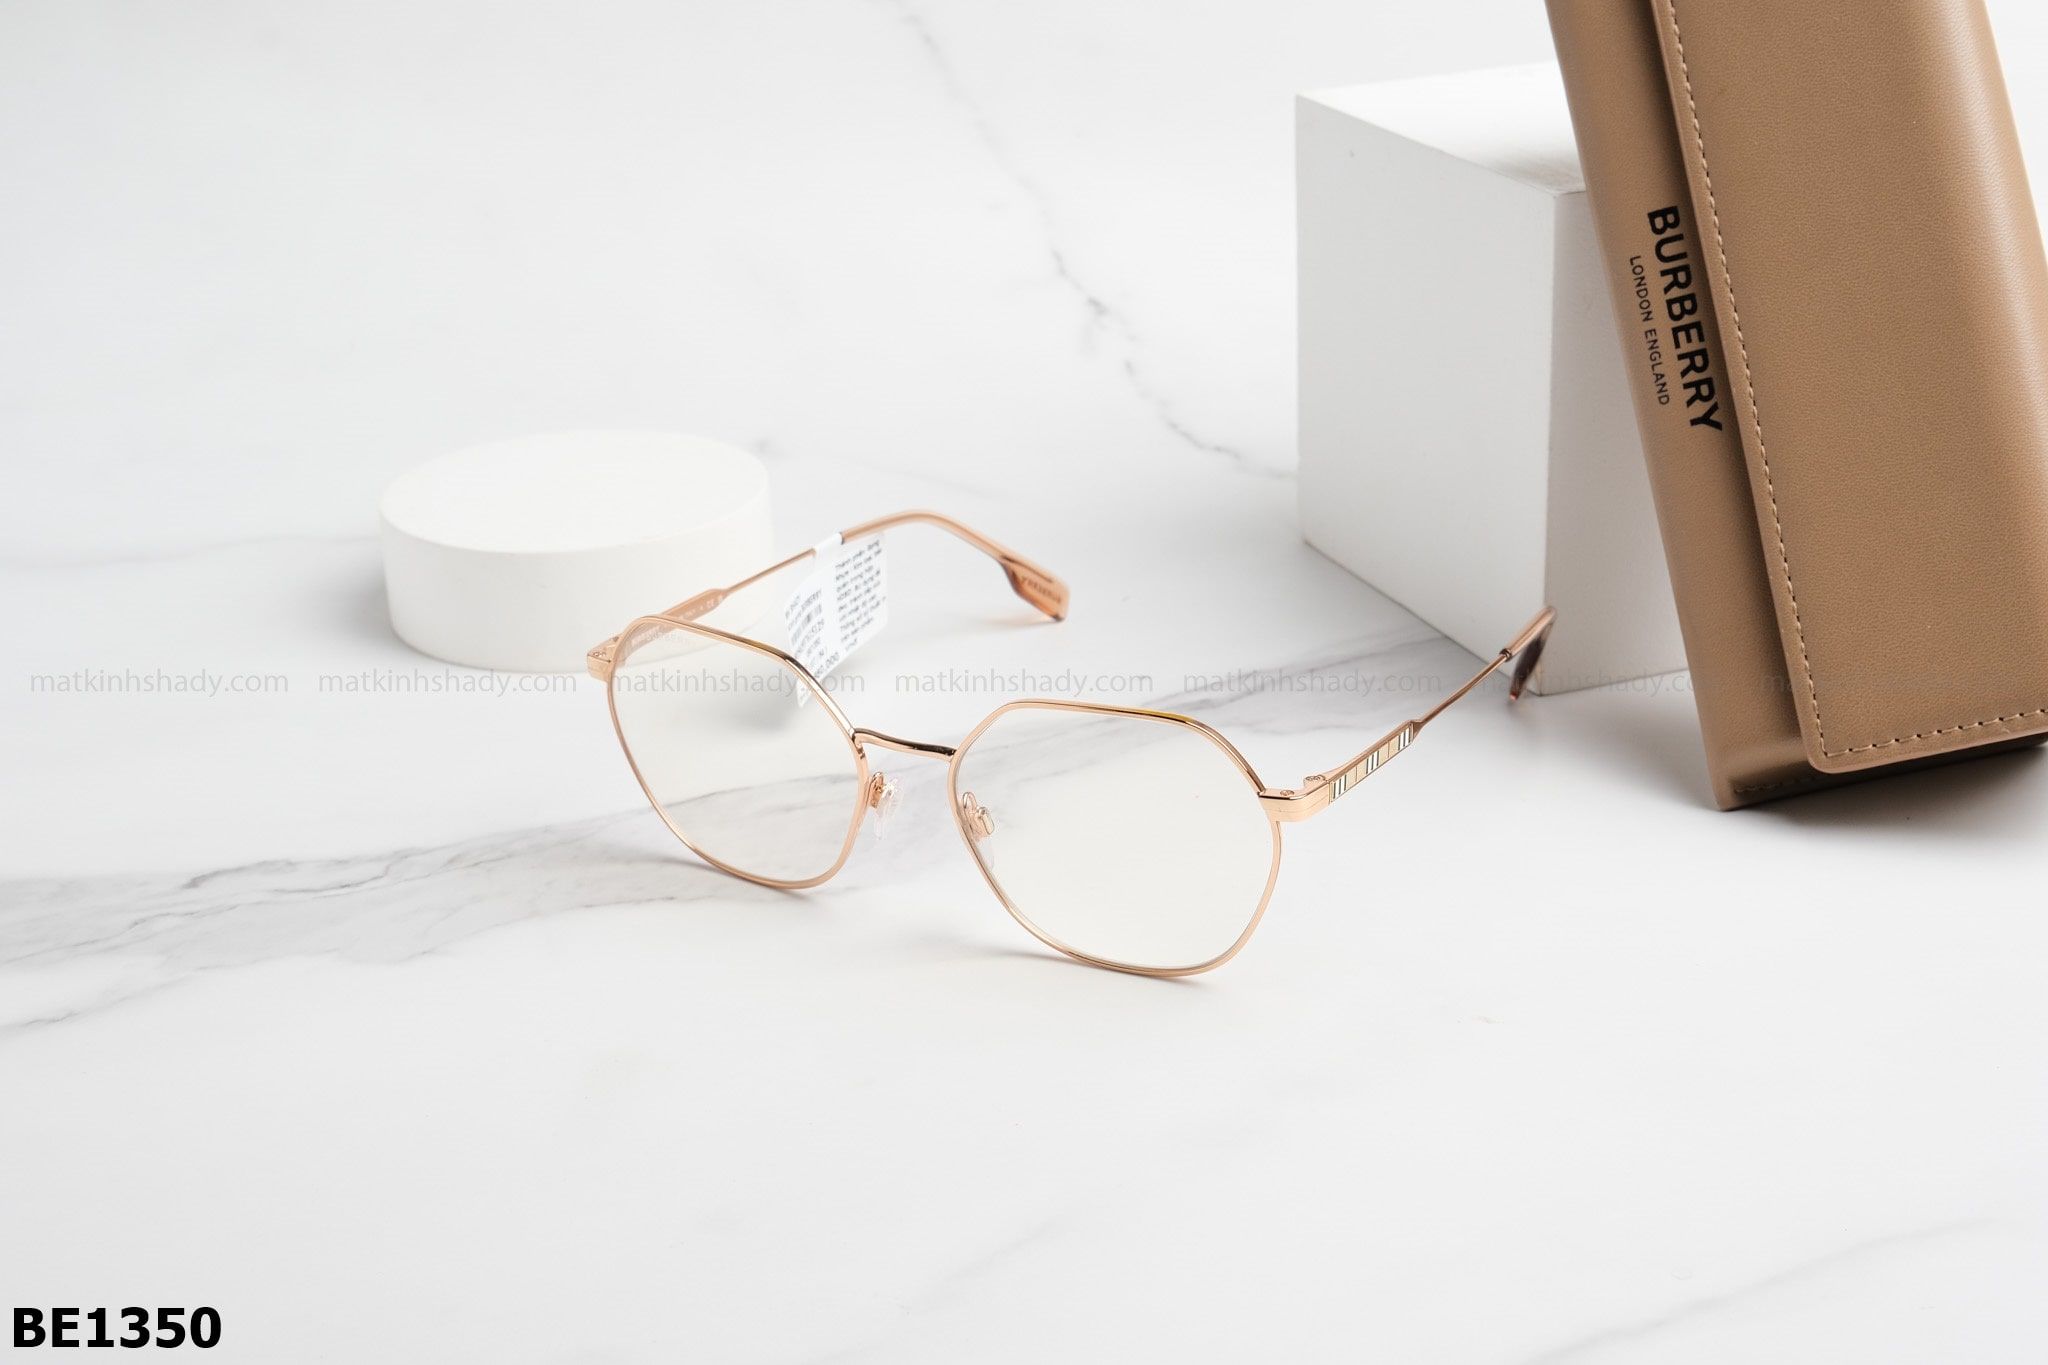  Burberry Eyewear - Glasses - BE1350 